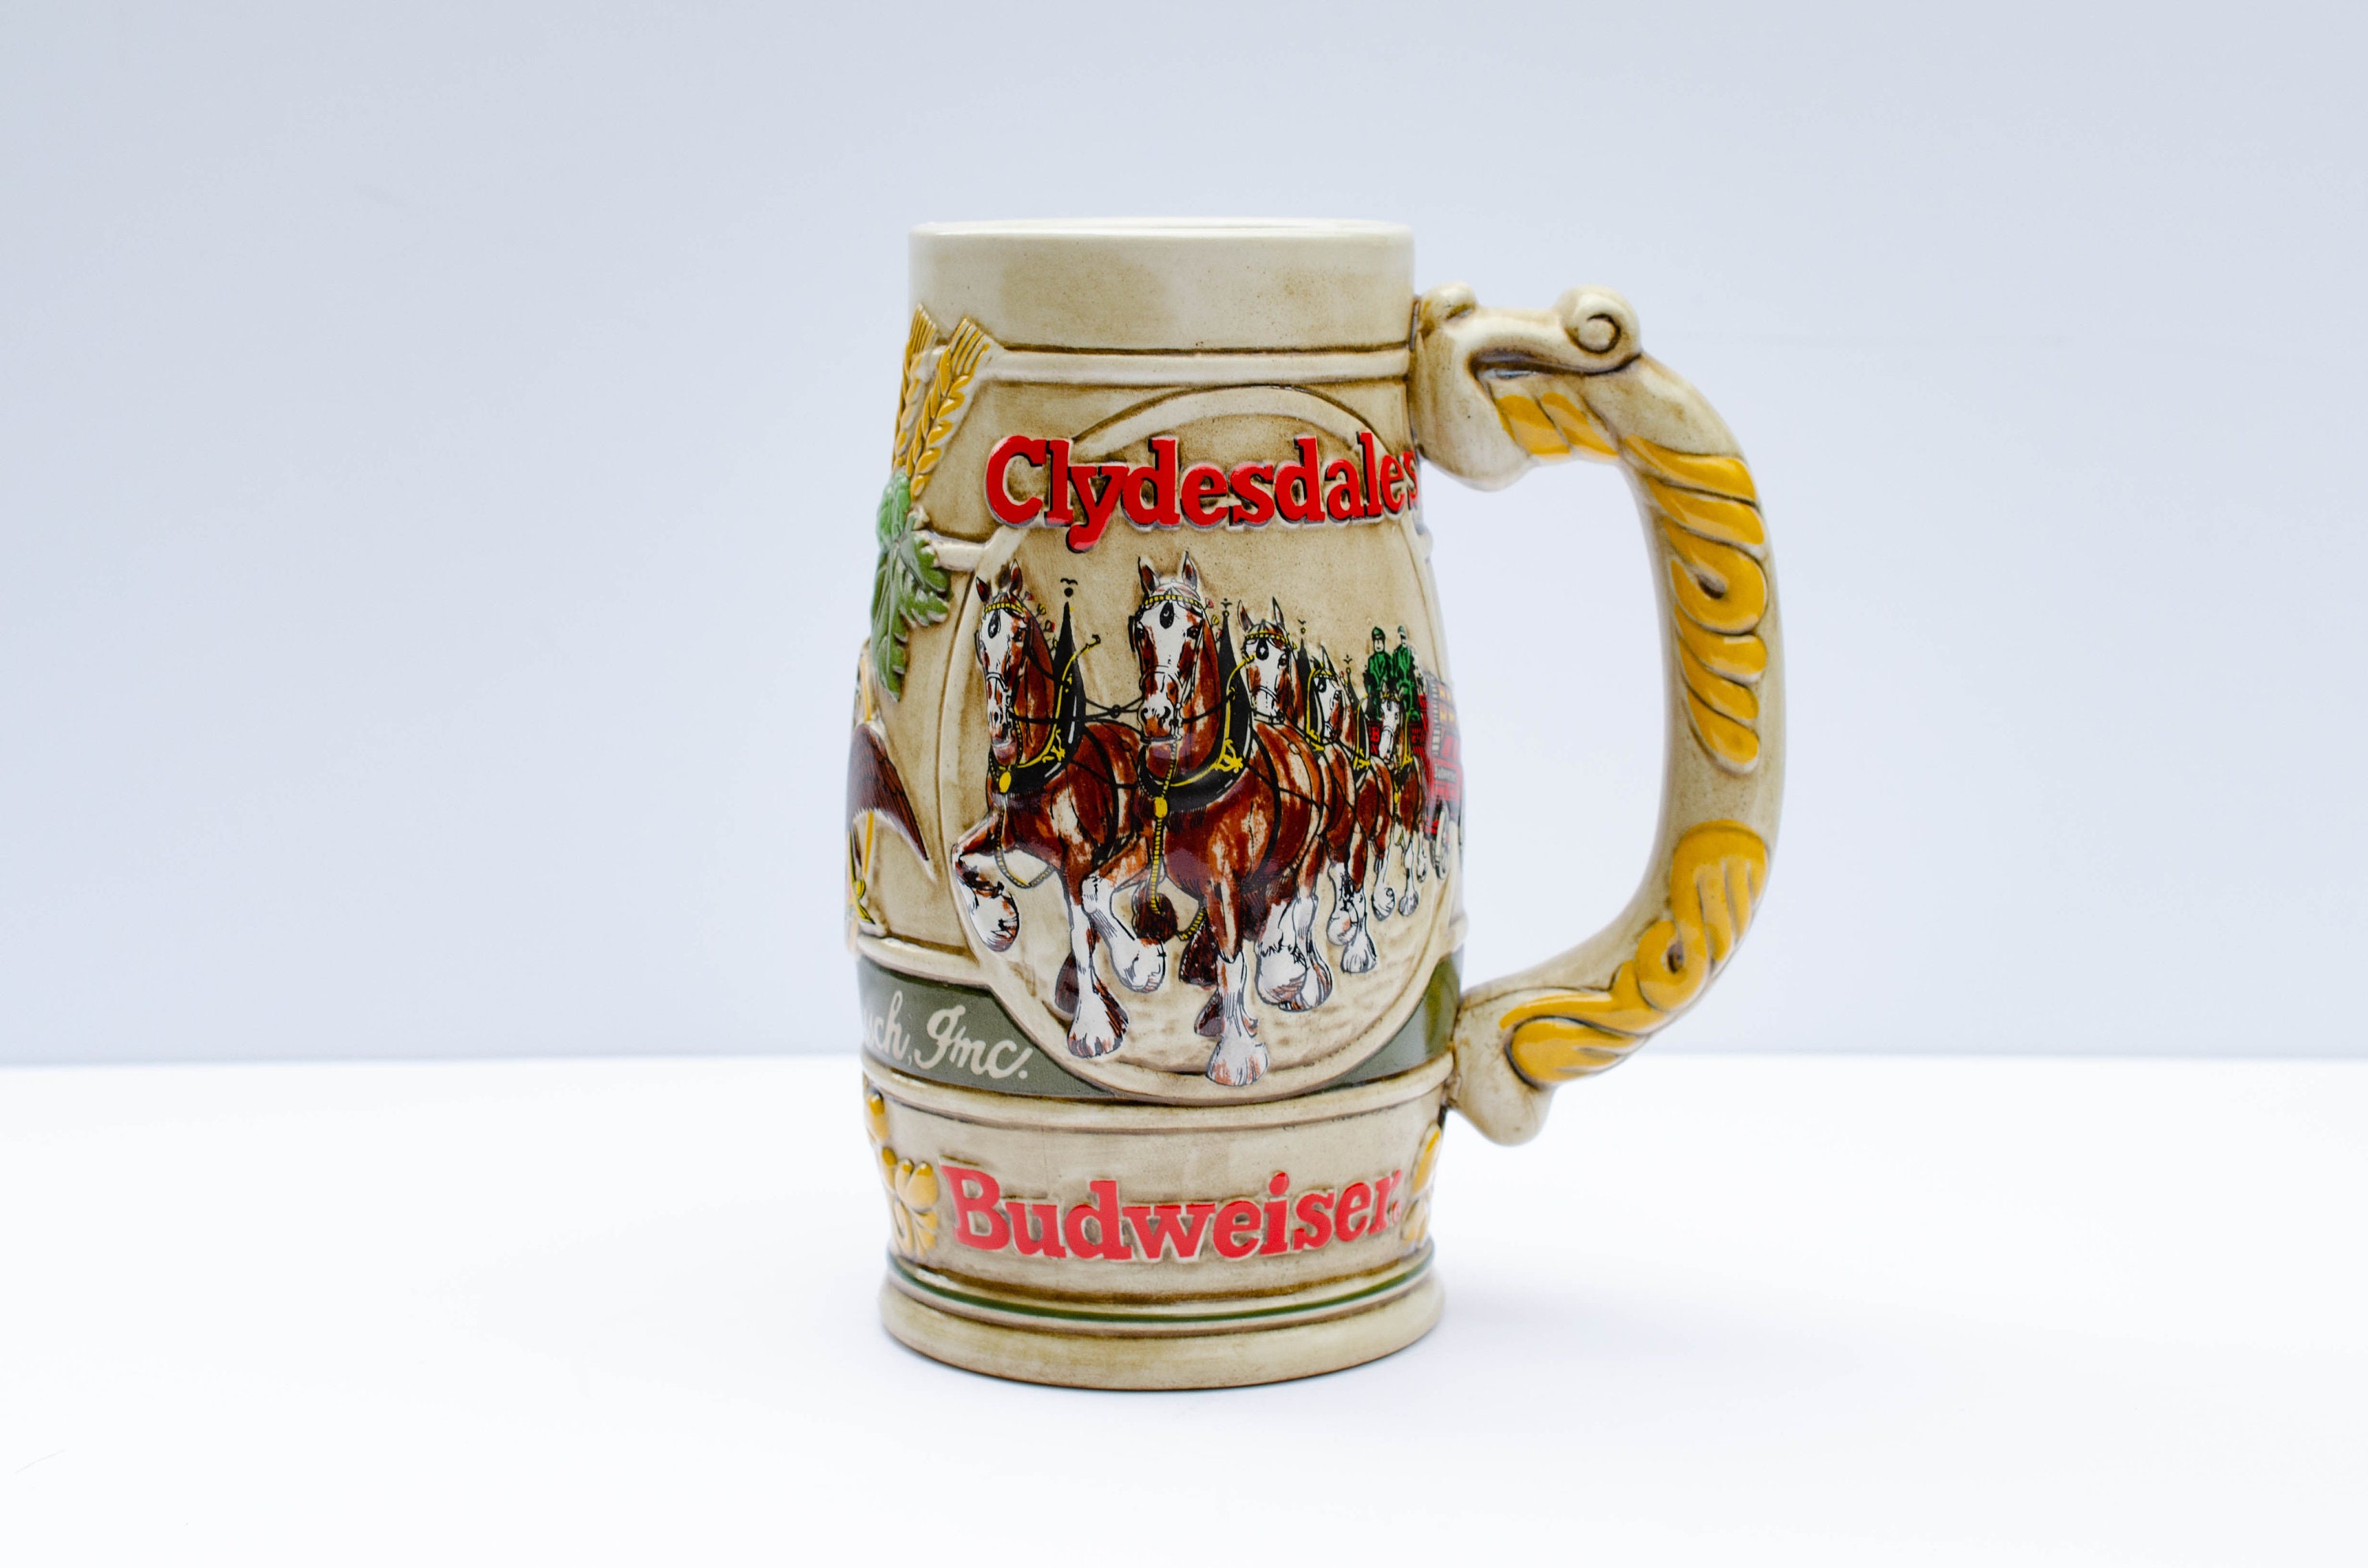 Vintage Budweiser Clydesdales Beer Stein Mug Tankard Anheuser-Busch Brewing Company